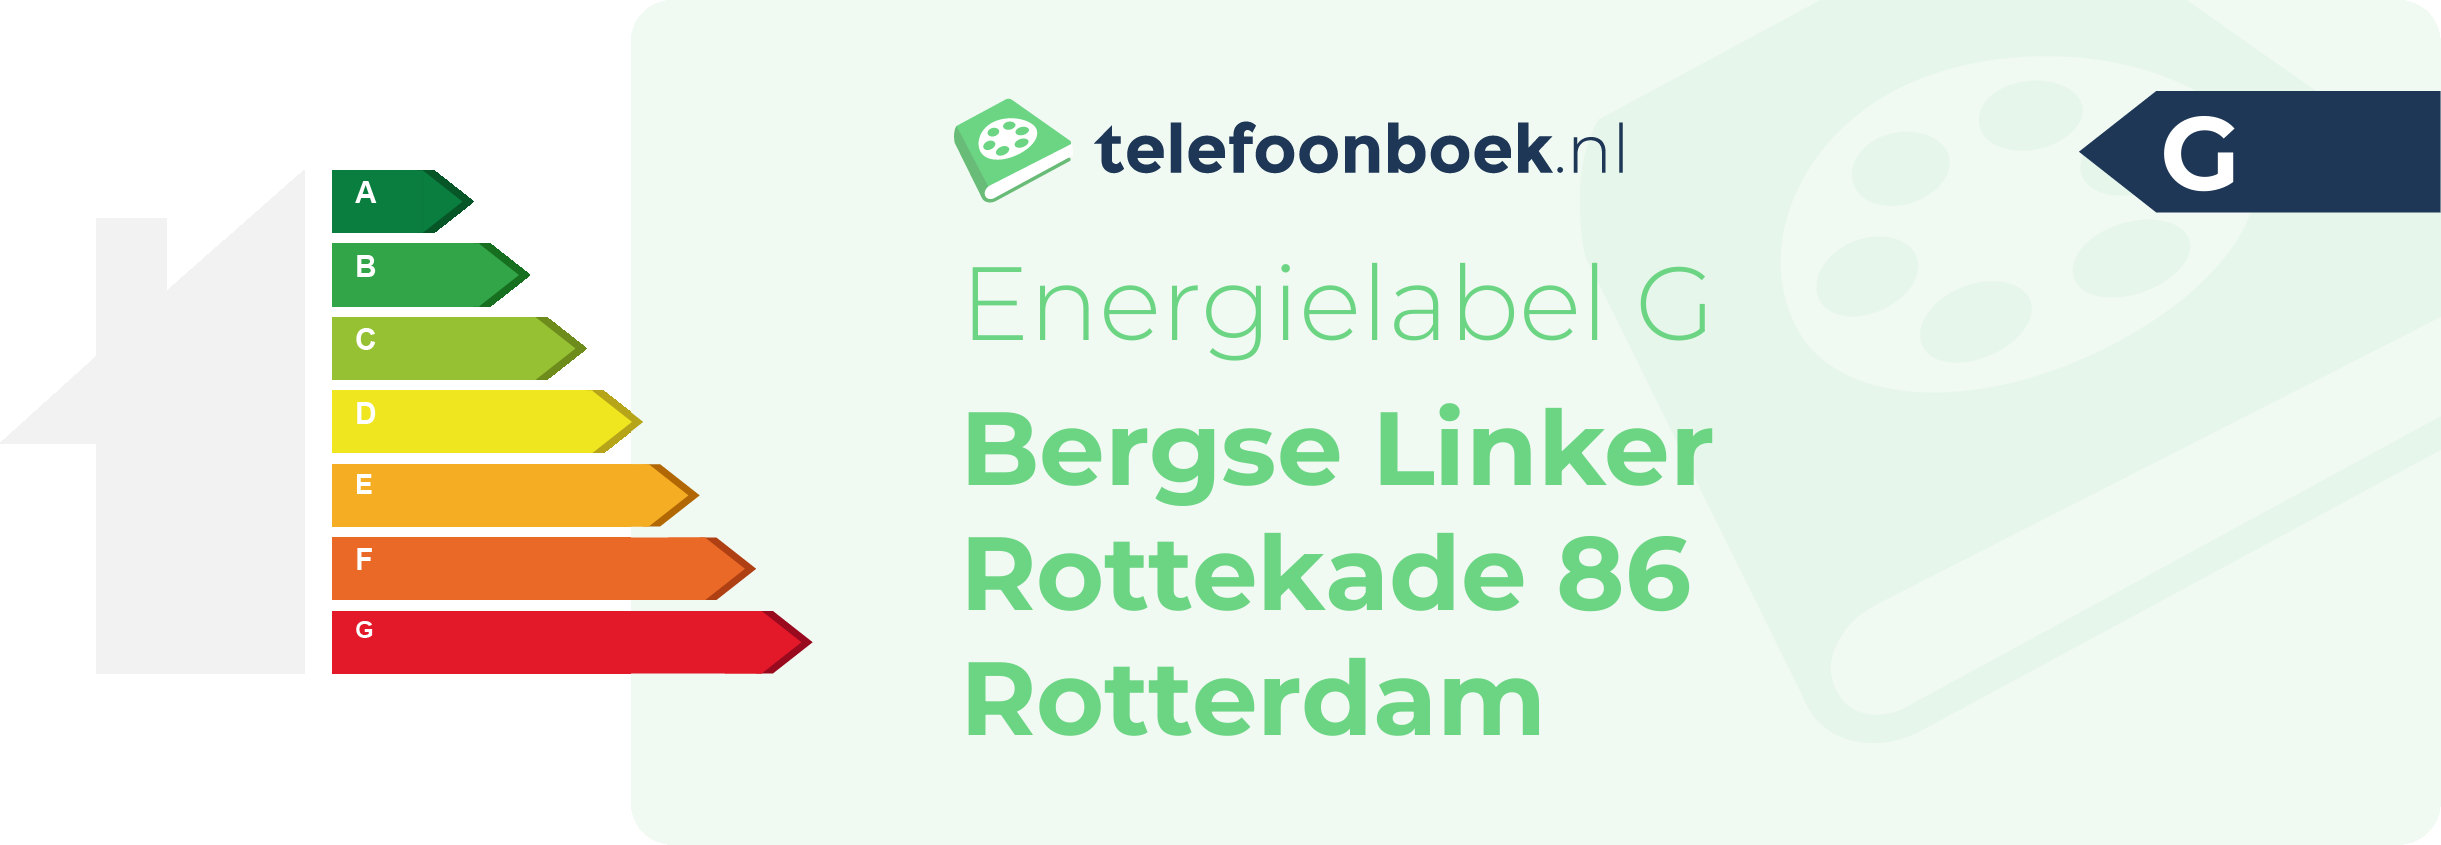 Energielabel Bergse Linker Rottekade 86 Rotterdam